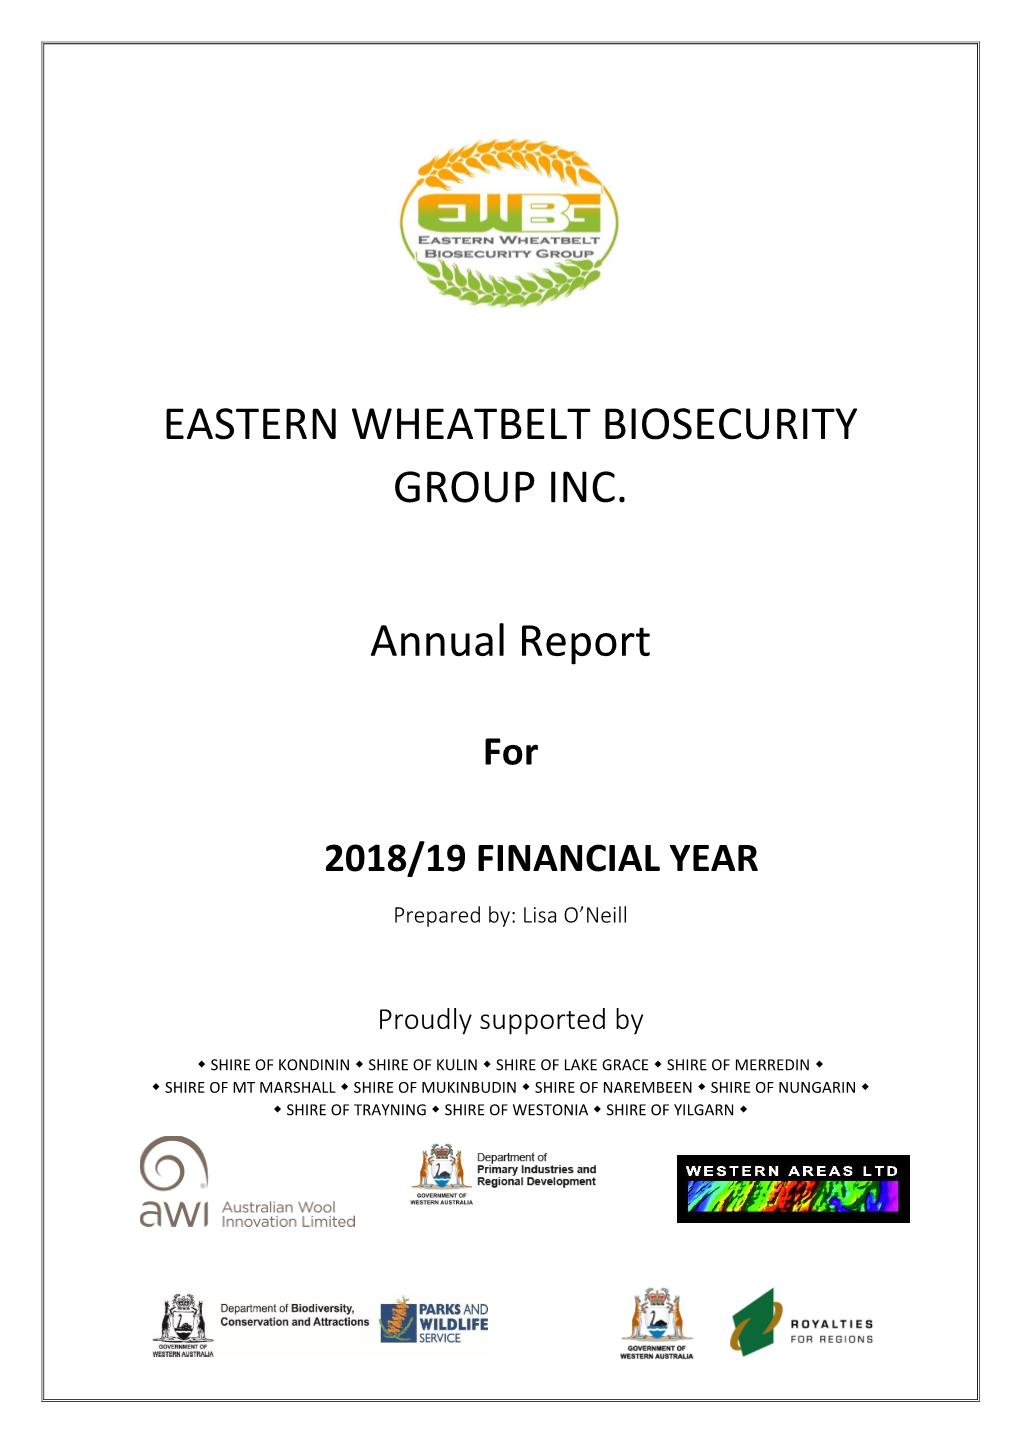 Eastern Wheatbelt Biosecurity Group Inc